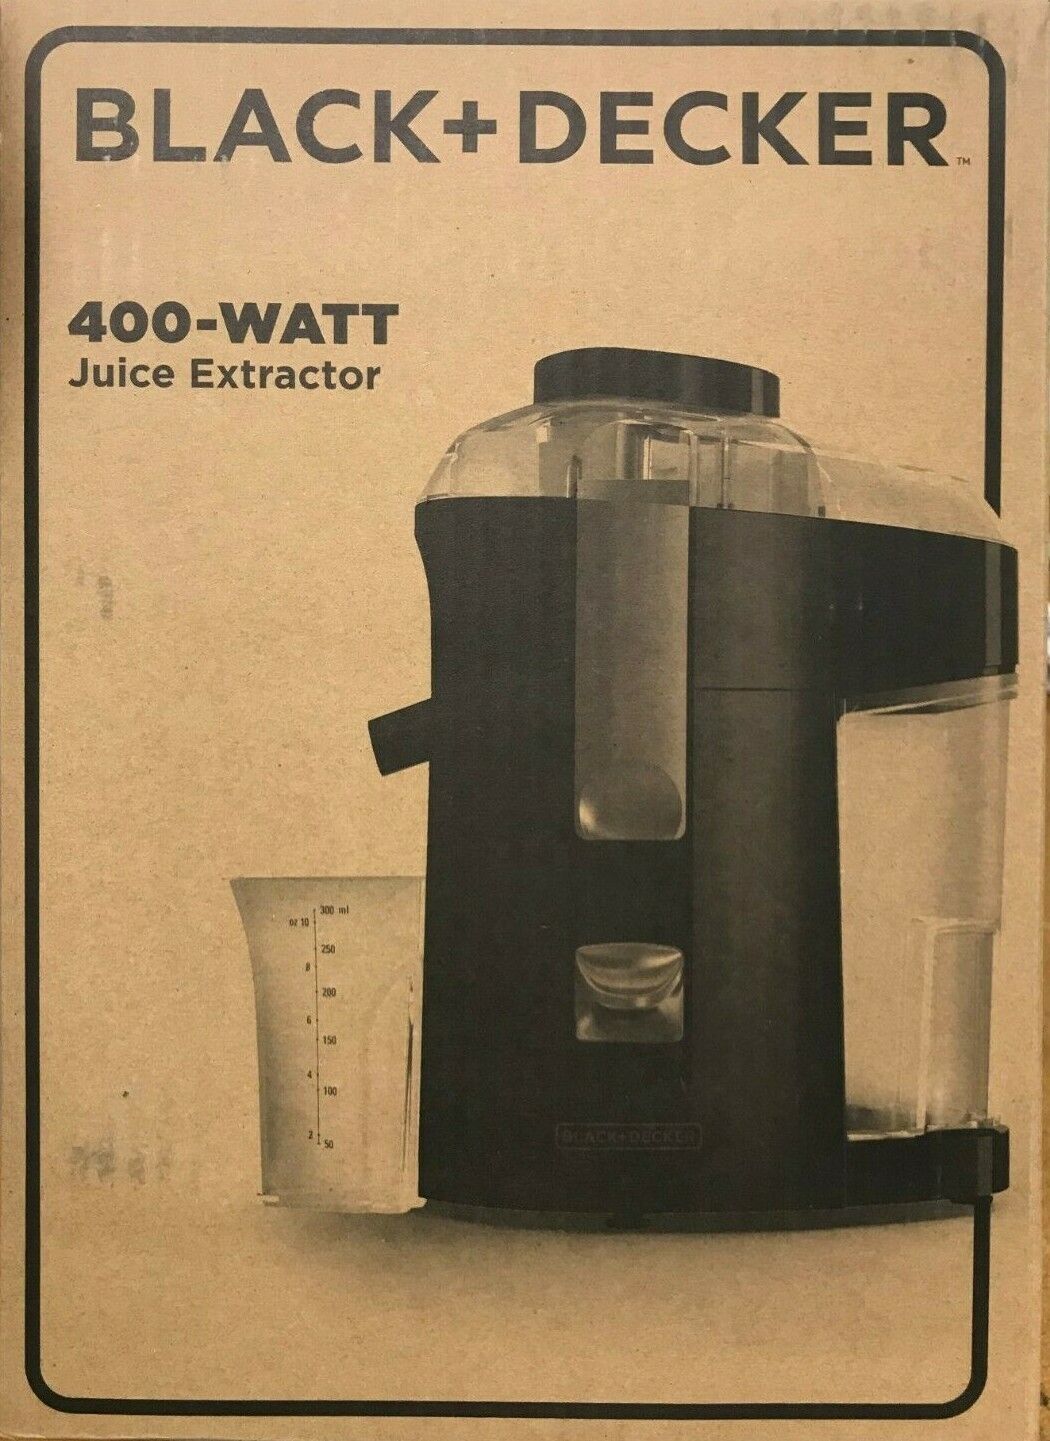 Black & Decker - JE2200B - Fruit and Vegetable Juice Extractor - Black - $79.95